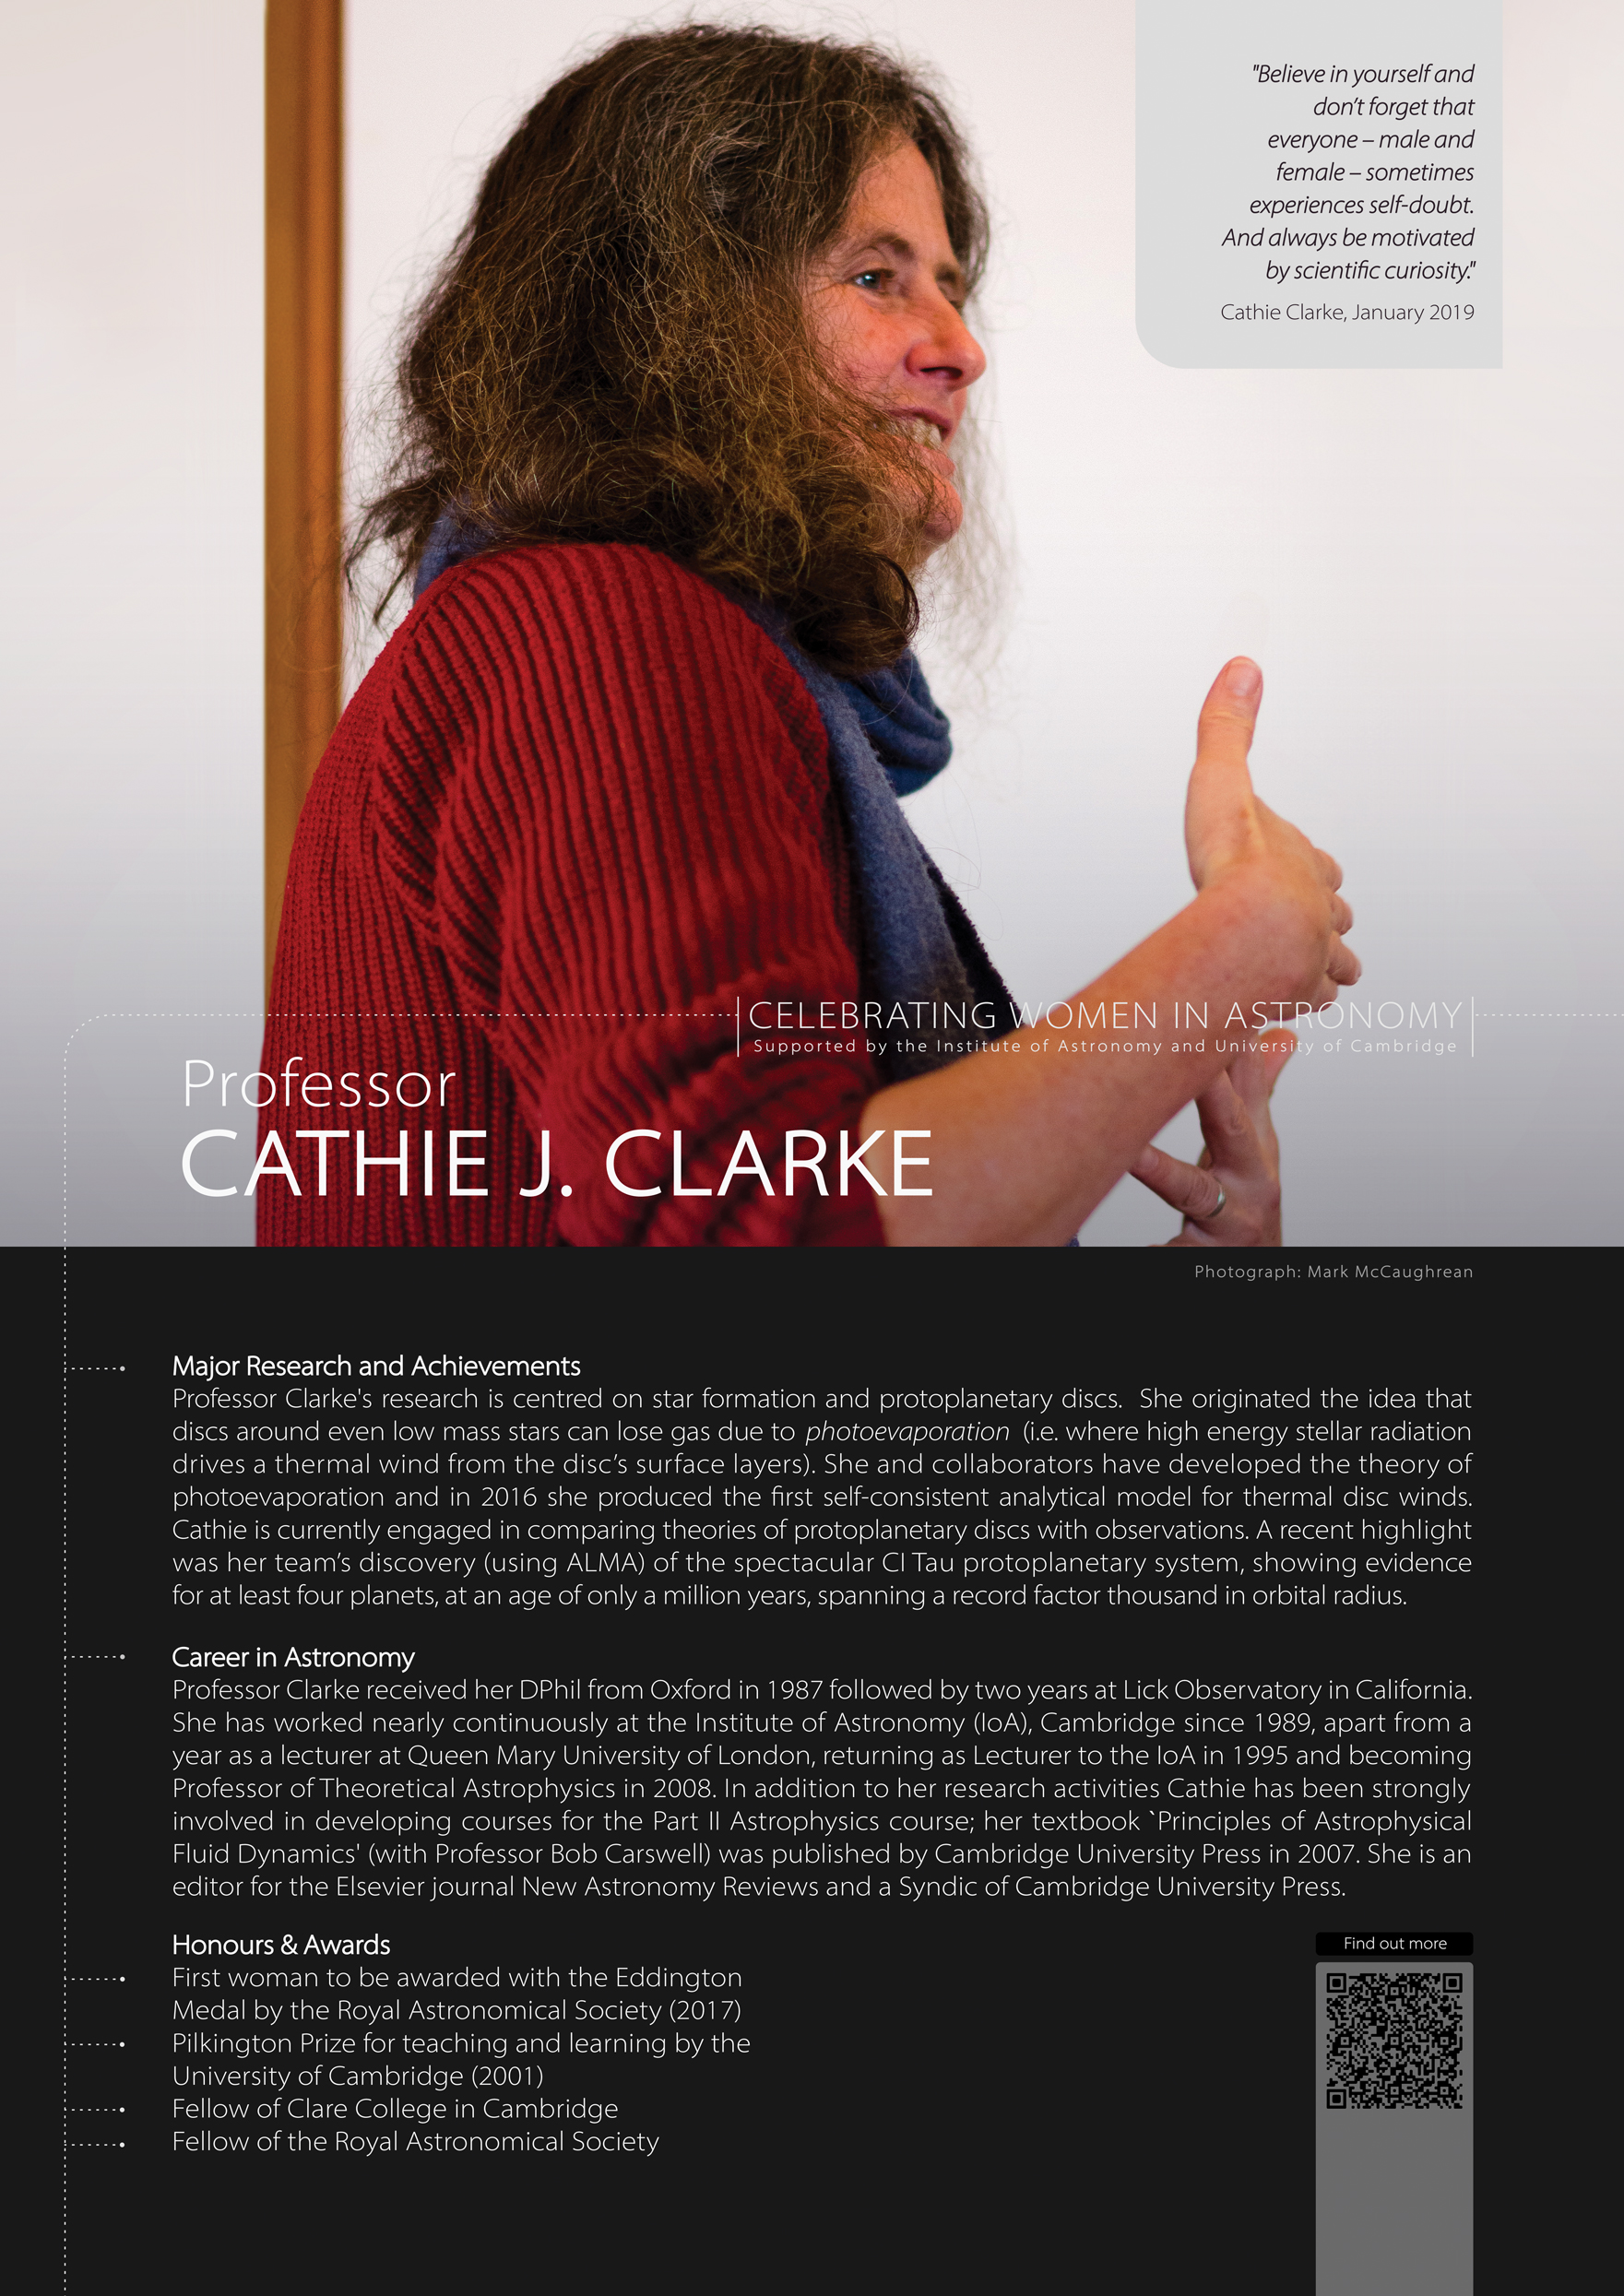 Cathie Clarke